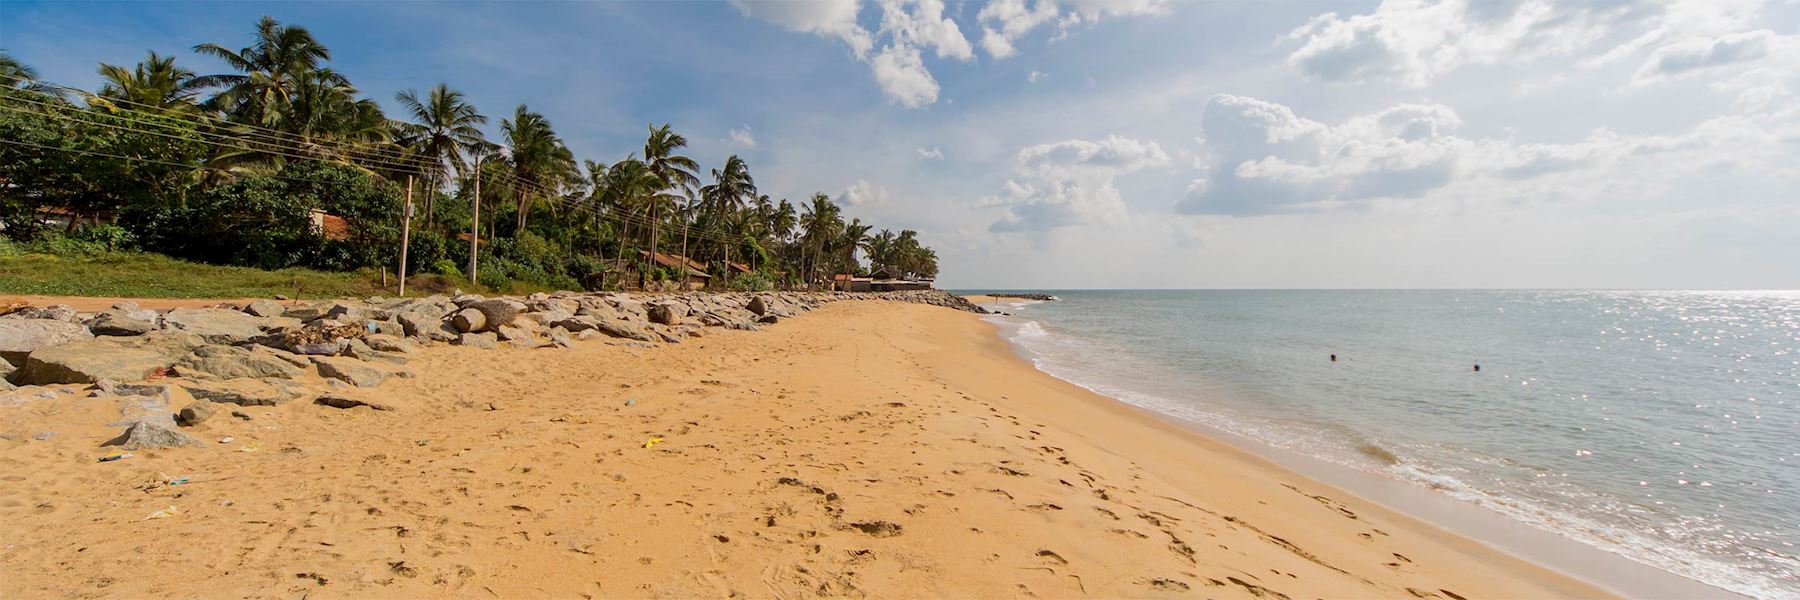 Visit Negombo on a trip to Sri Lanka | Audley Travel